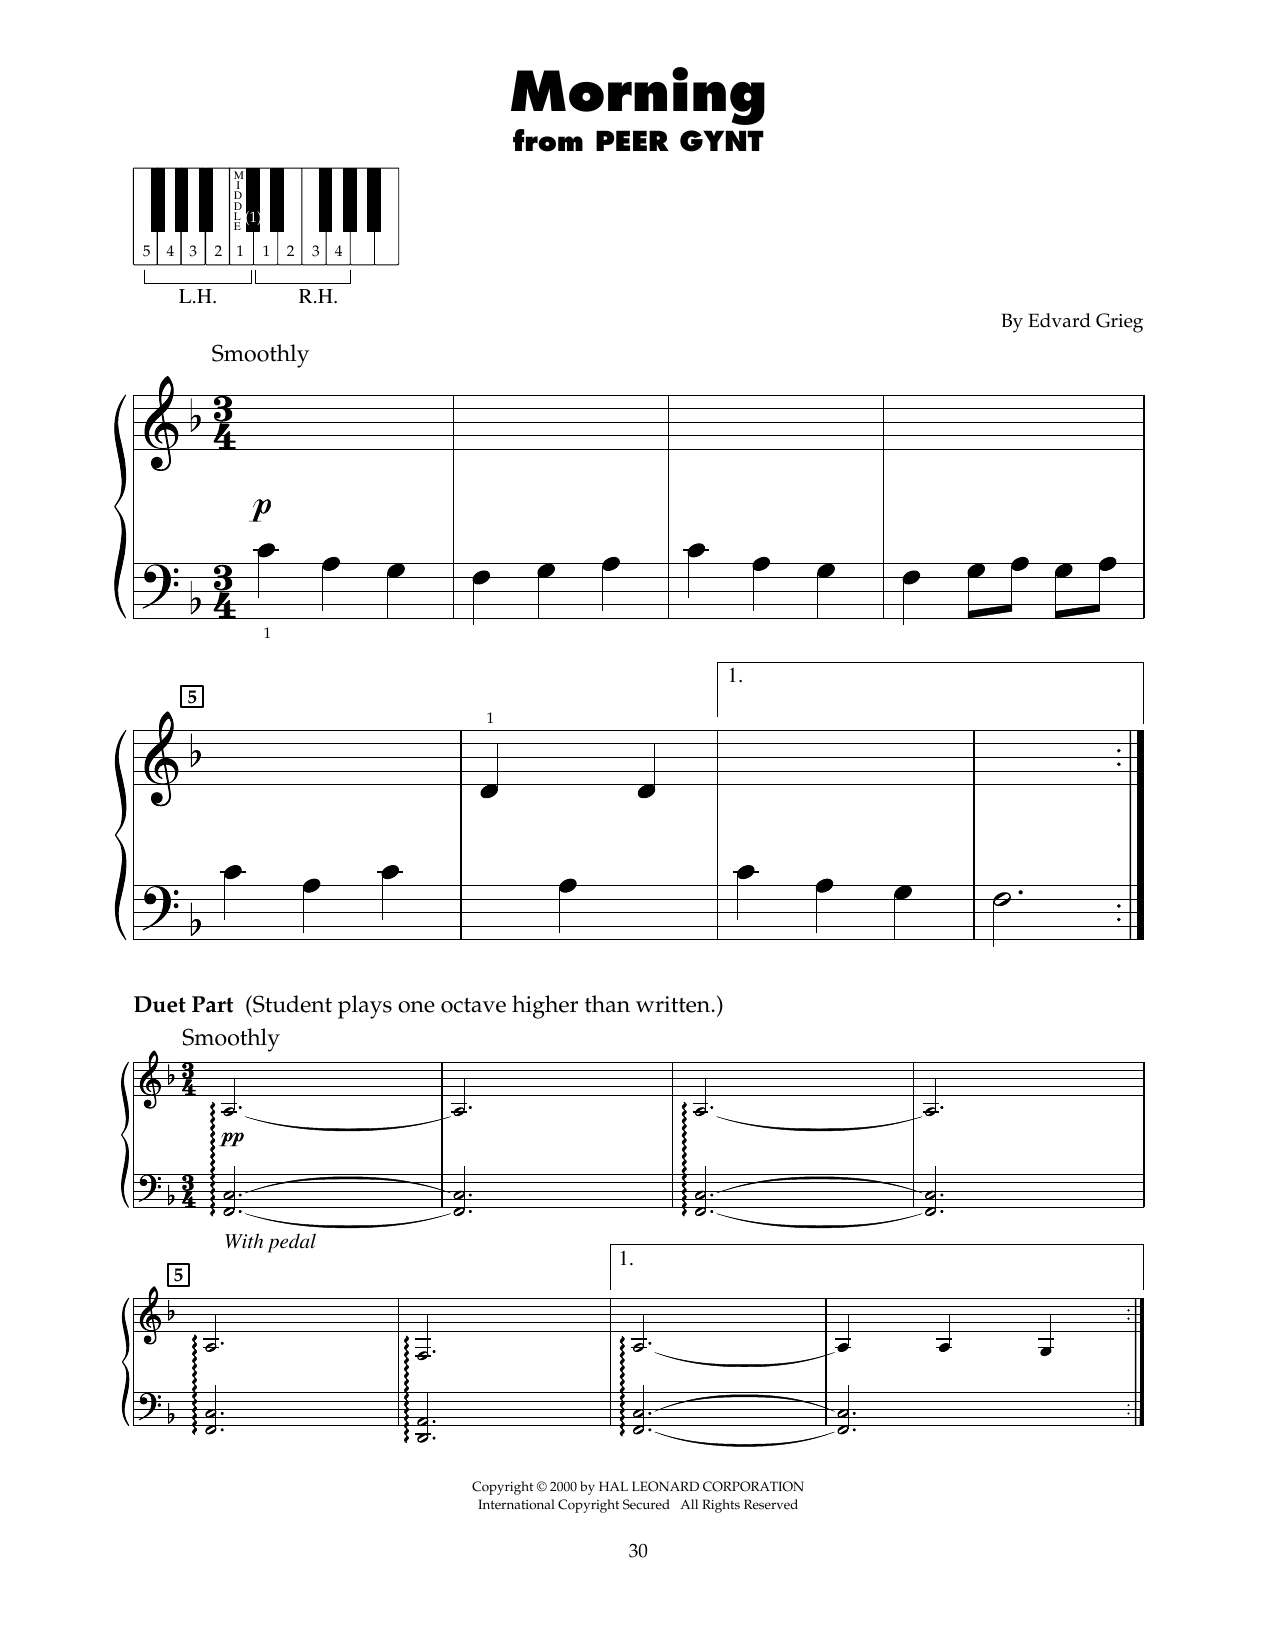 Edvard Grieg Morning (arr. Carol Klose) Sheet Music Notes & Chords for 5-Finger Piano - Download or Print PDF